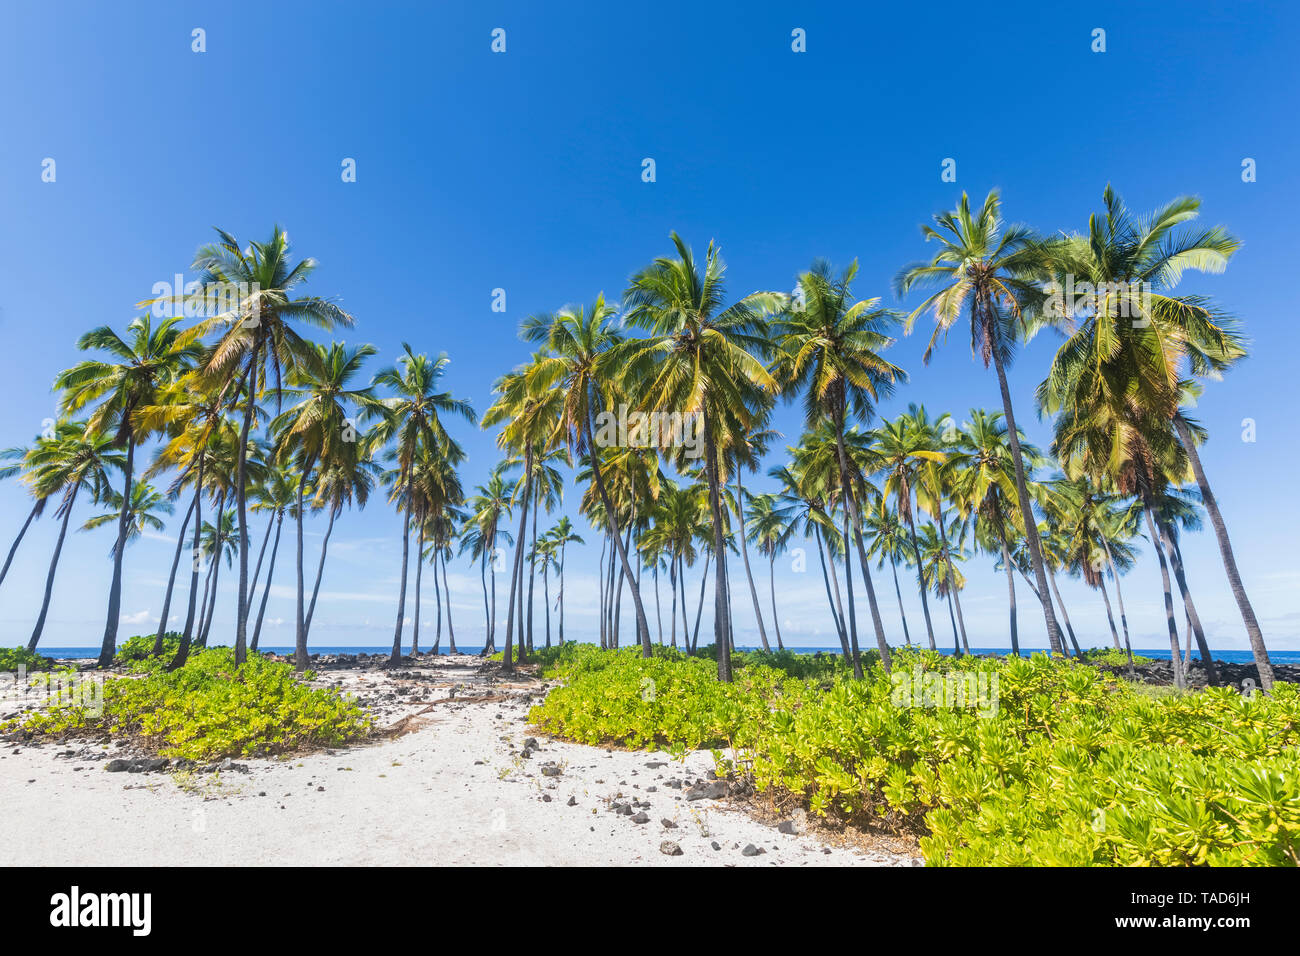 USA, Hawaii, Big Island, Pu'uhonua o Honaunau National Park, de palmiers sur la plage Banque D'Images